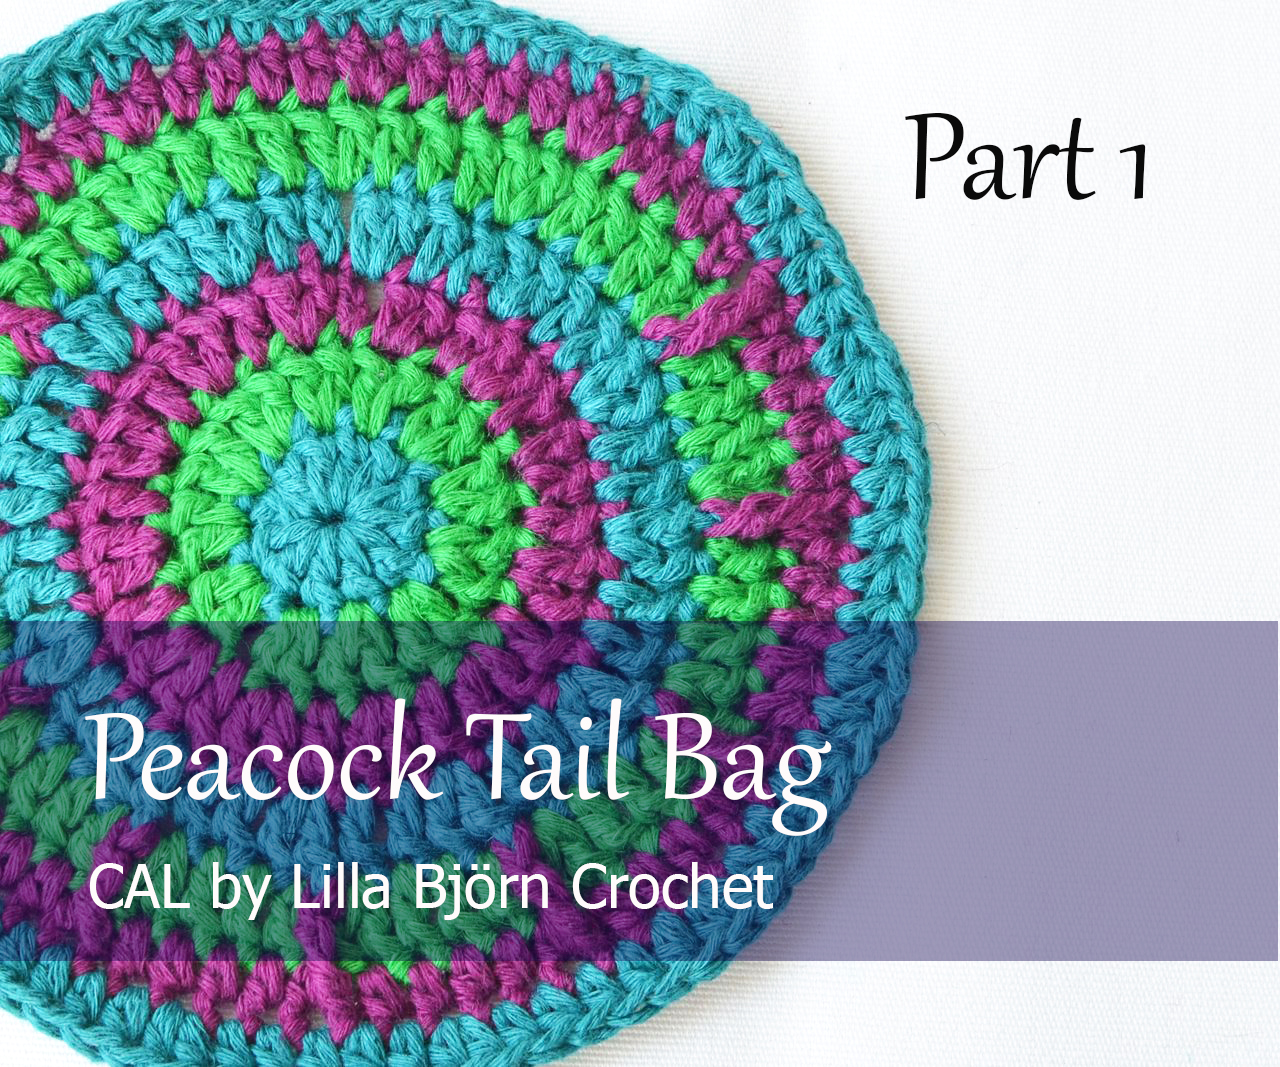 Peacock Tail Bag CAL - Part 1. Original design by Lilla Bjorn Crochet